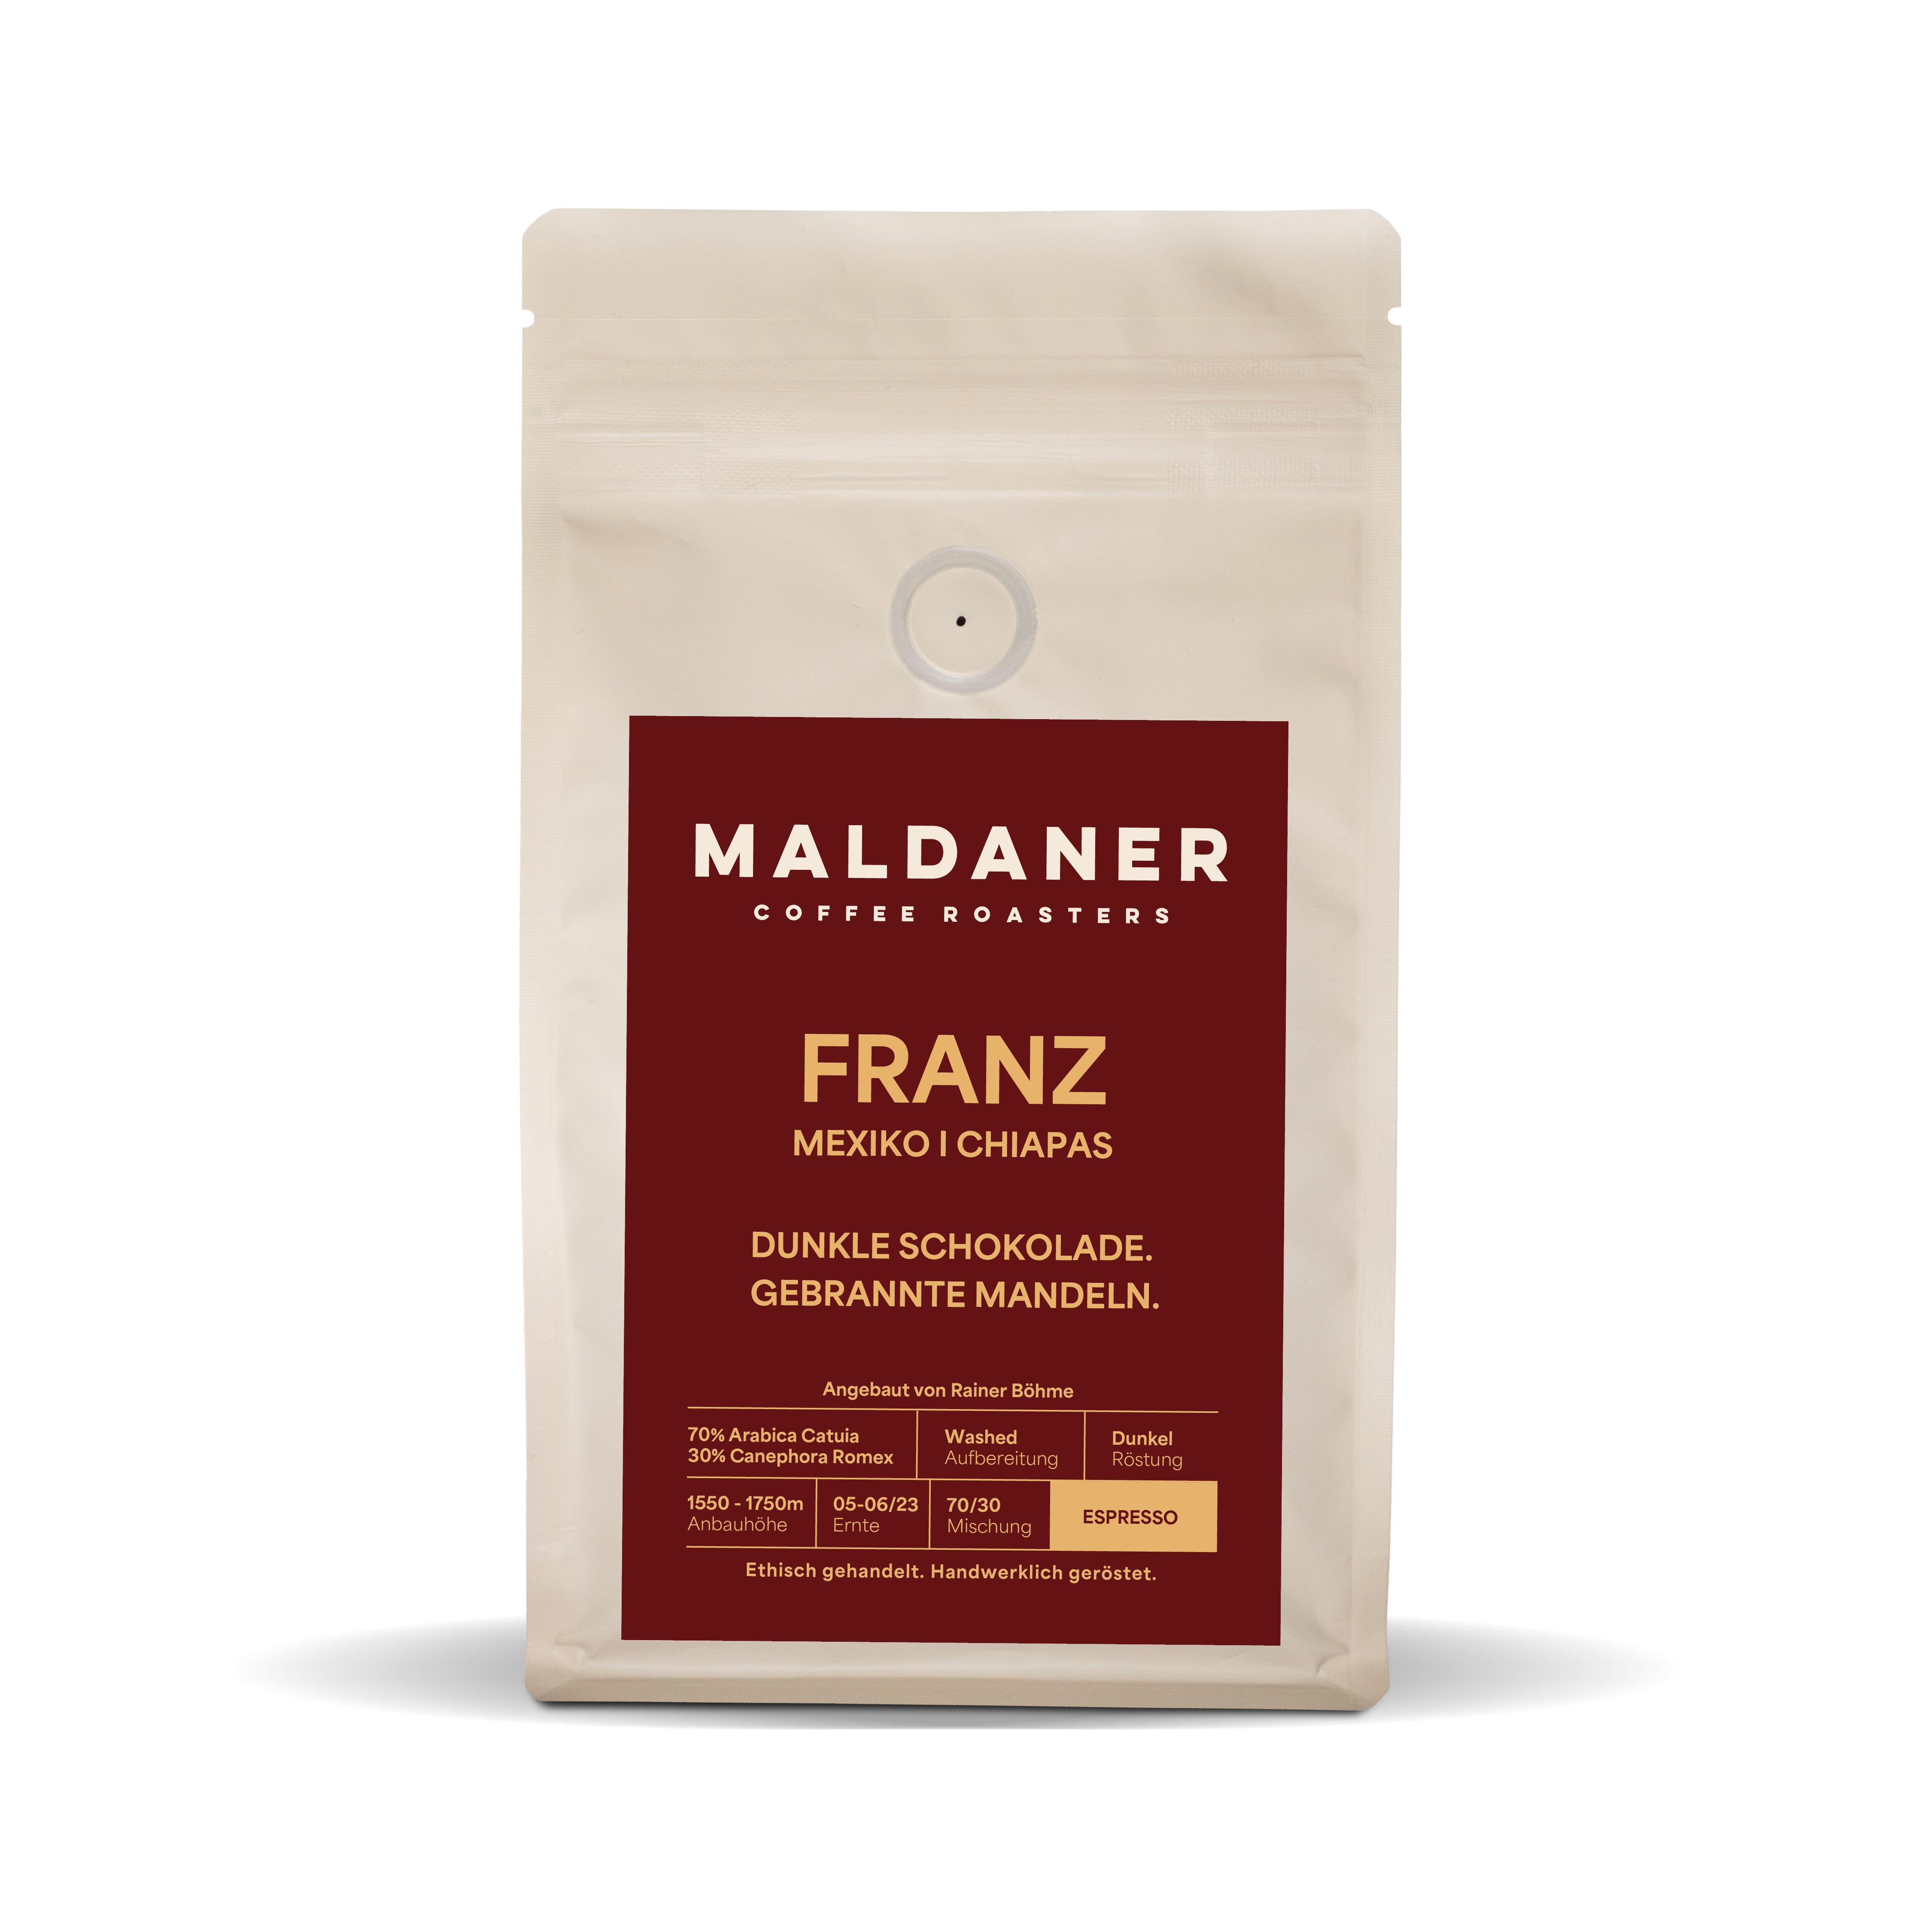 Pfandbehälter 5€ – Maldaner Coffee